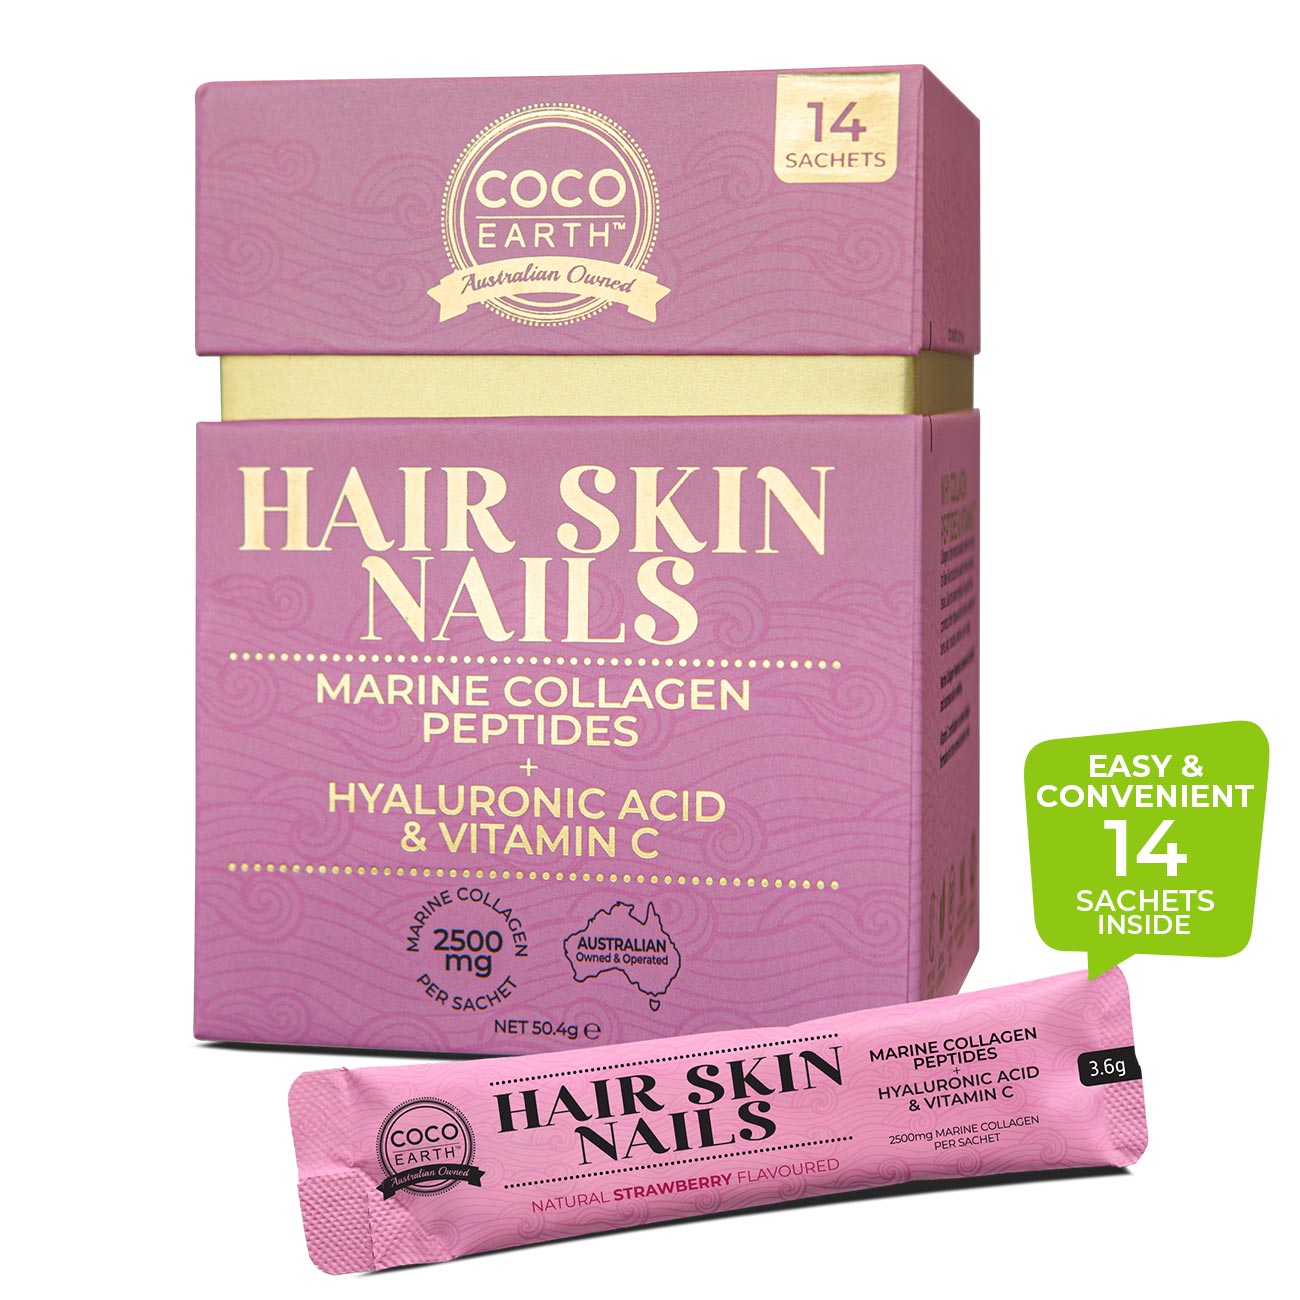 Coco Earth M/Collagen + Hair Skin Nails 3.6g x 14 Sachets